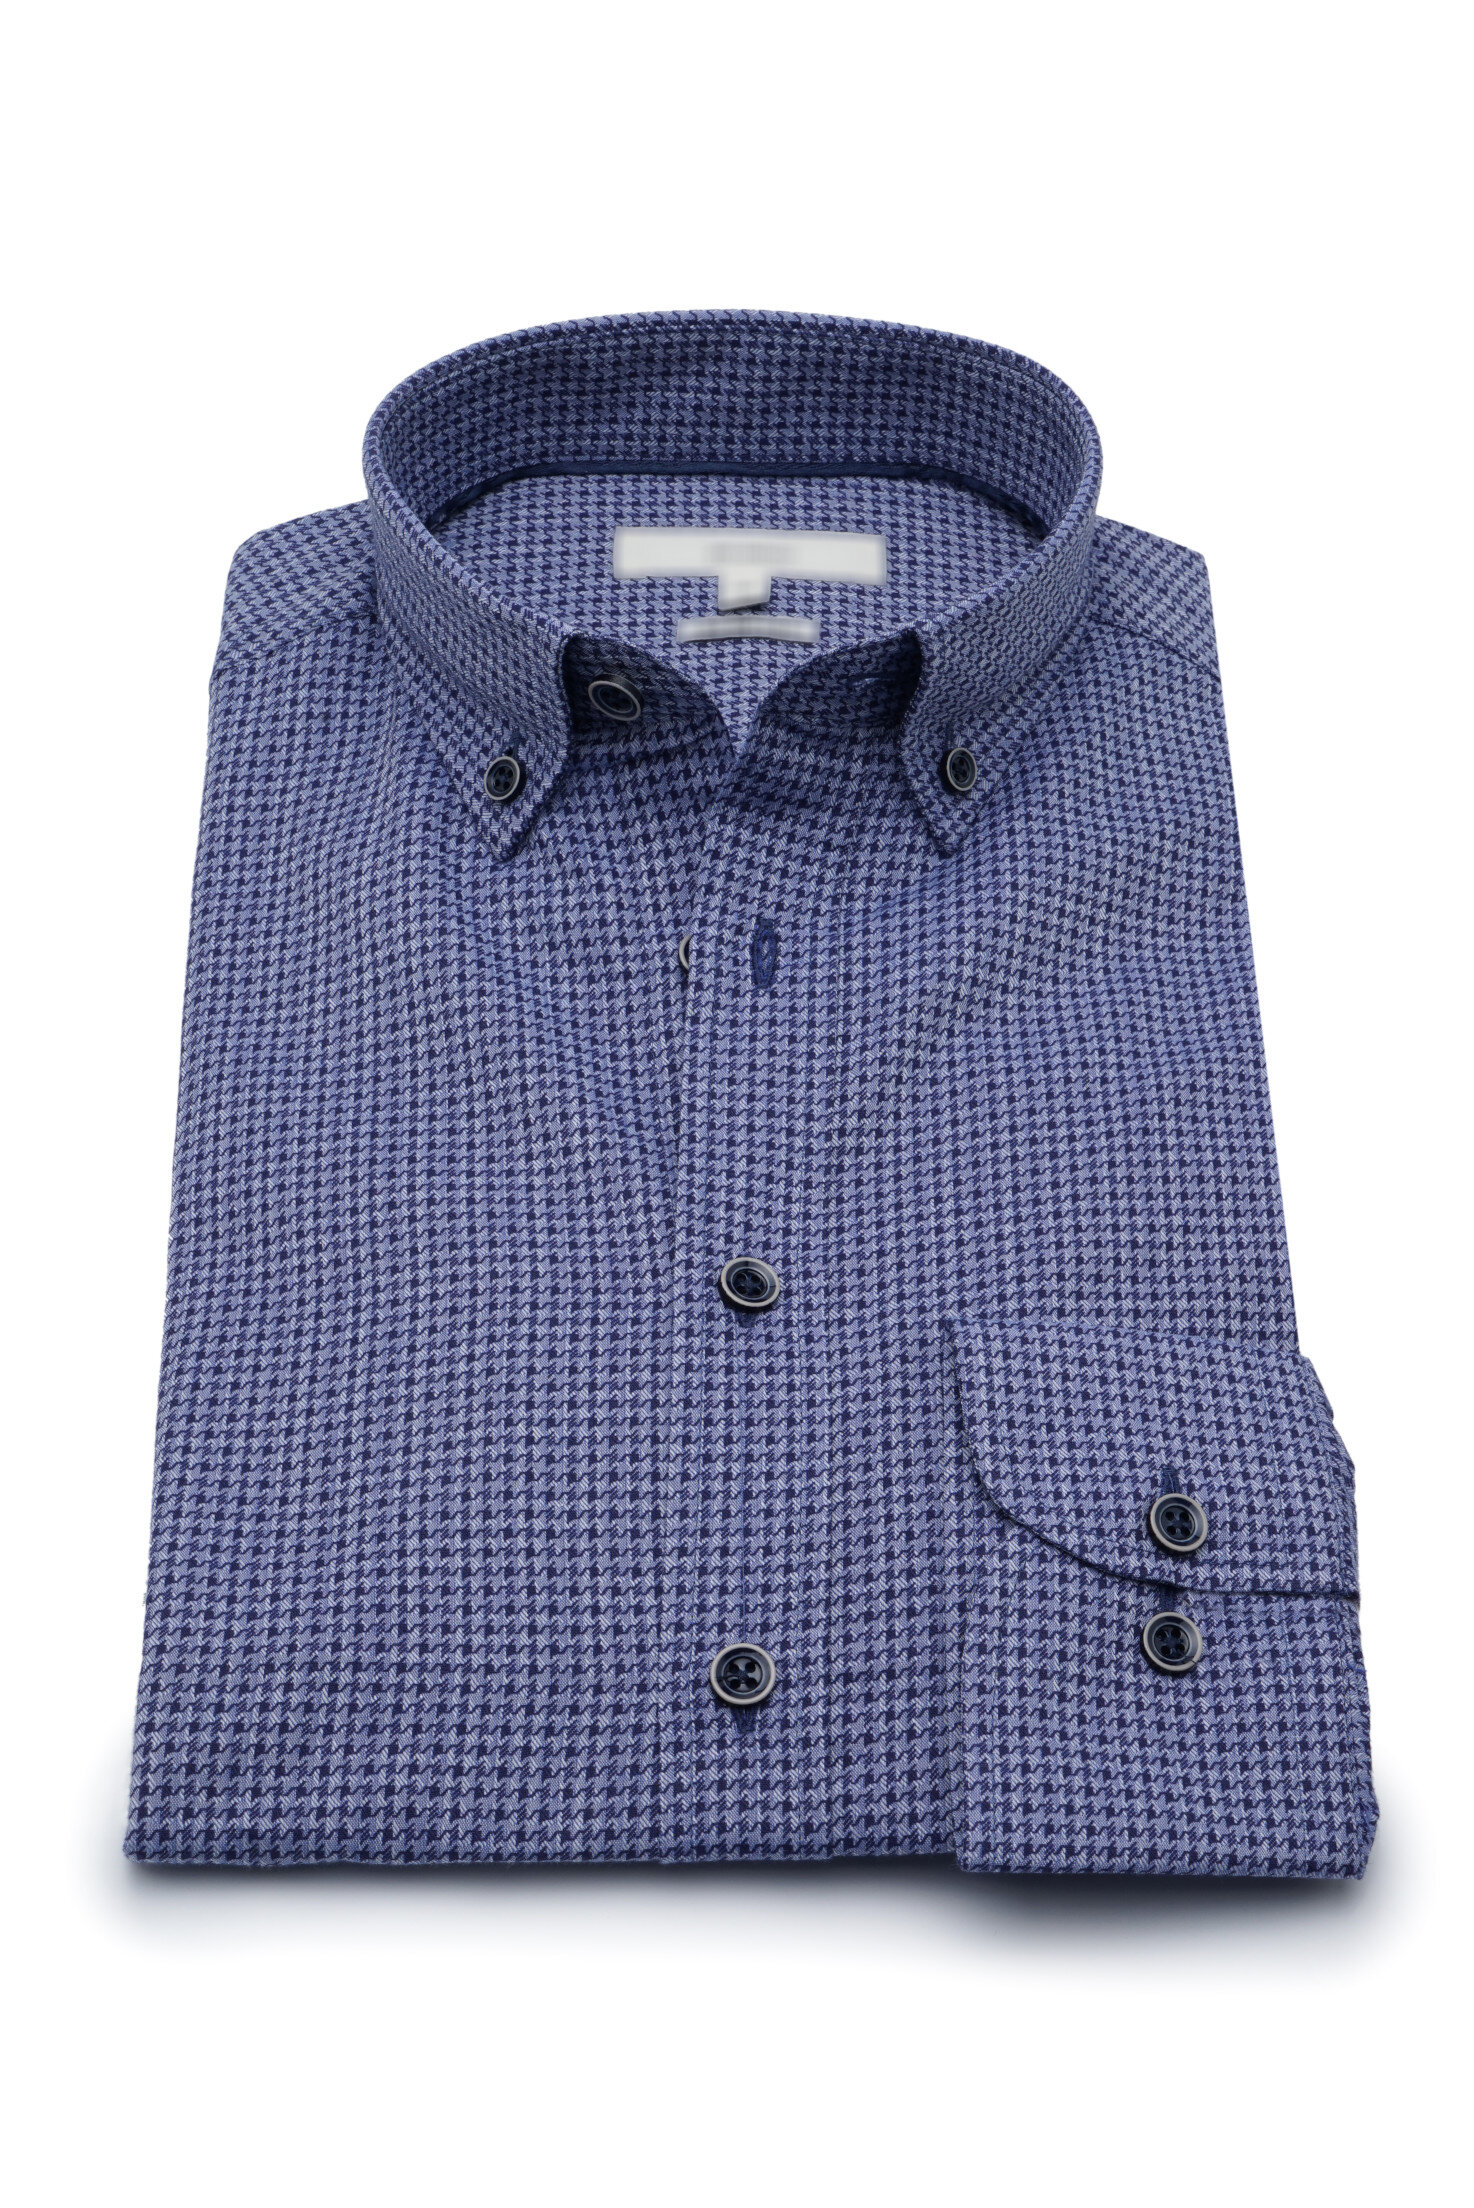 268 Wholesale Button Down Shirts - Cotton Shirts Manufacturer | TURKEY